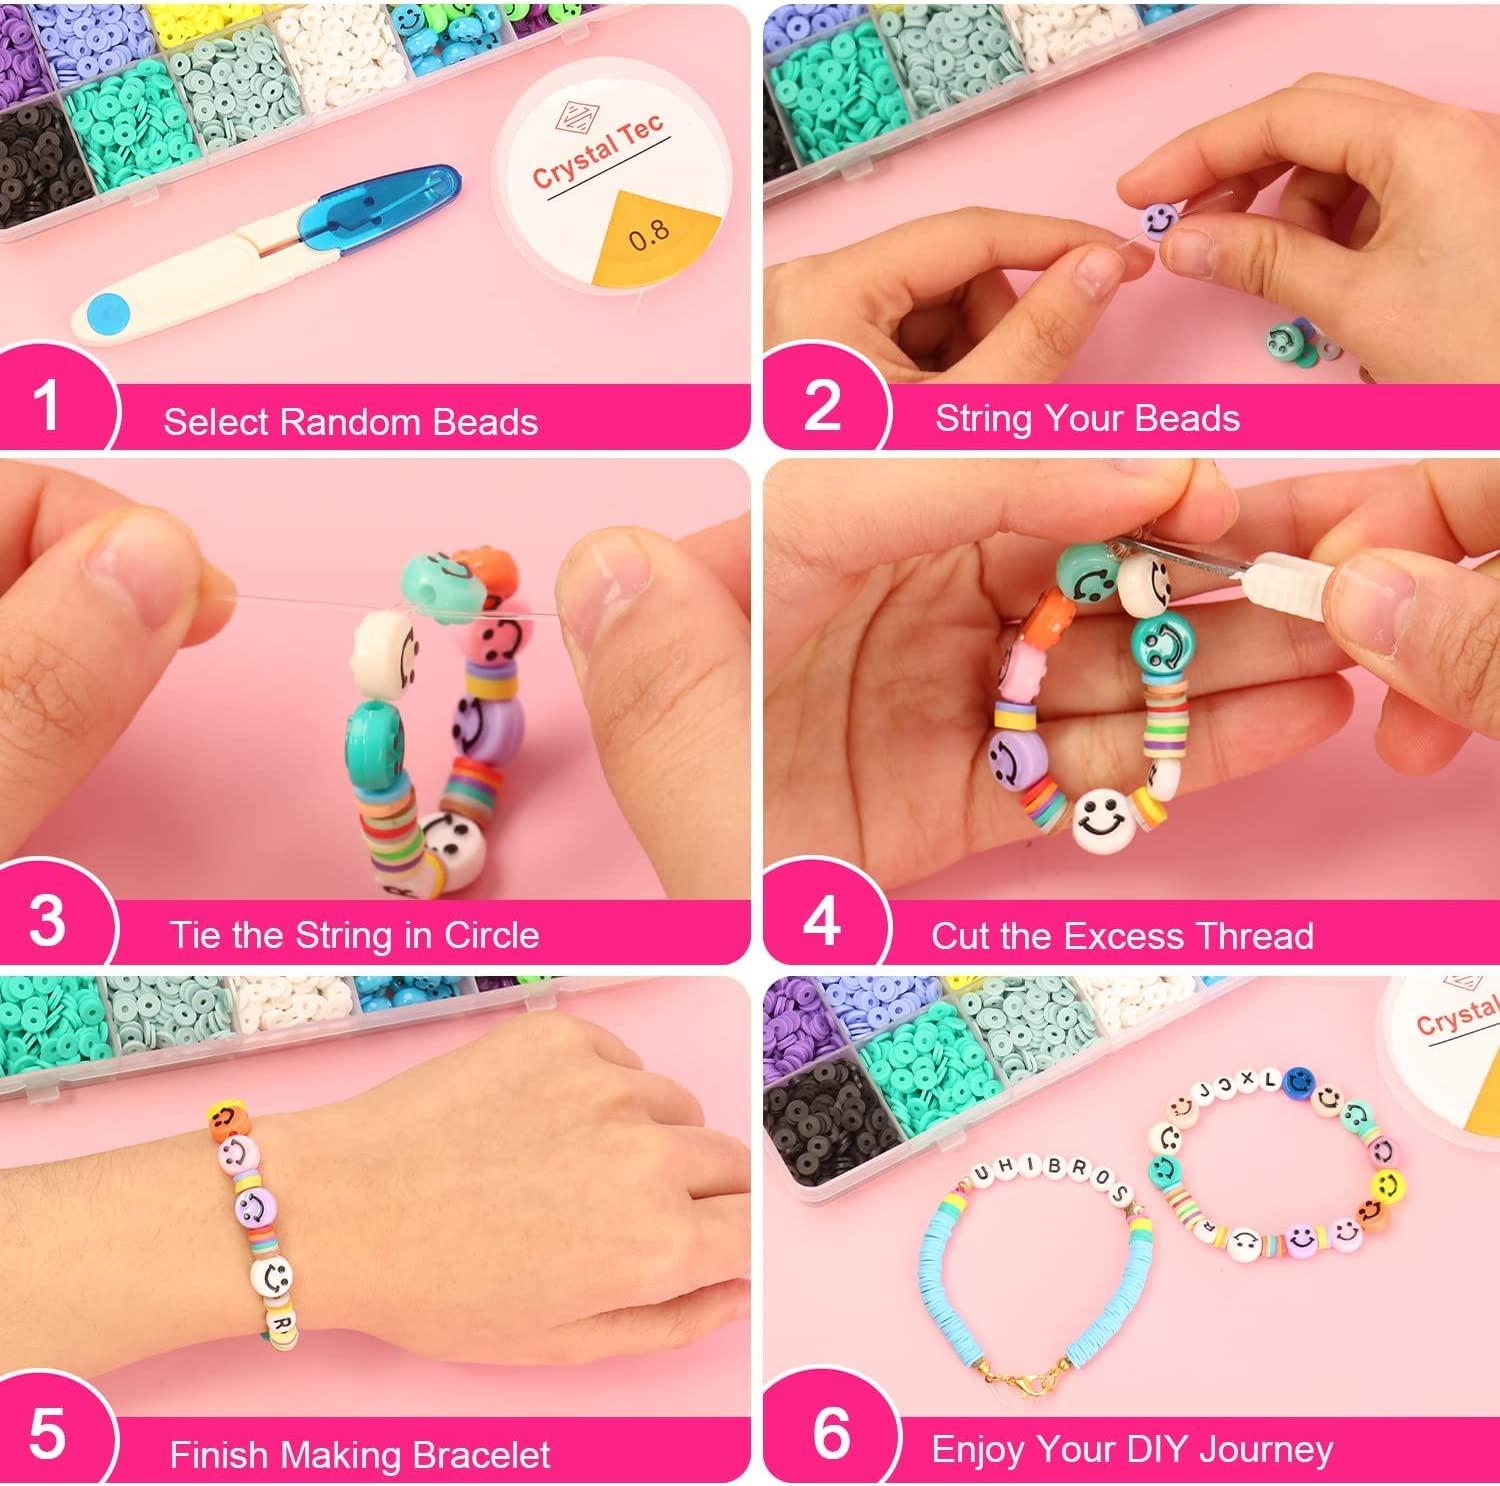 100pcs/set Fashionable Random Color Beads DIY Jewelry Making Accessories